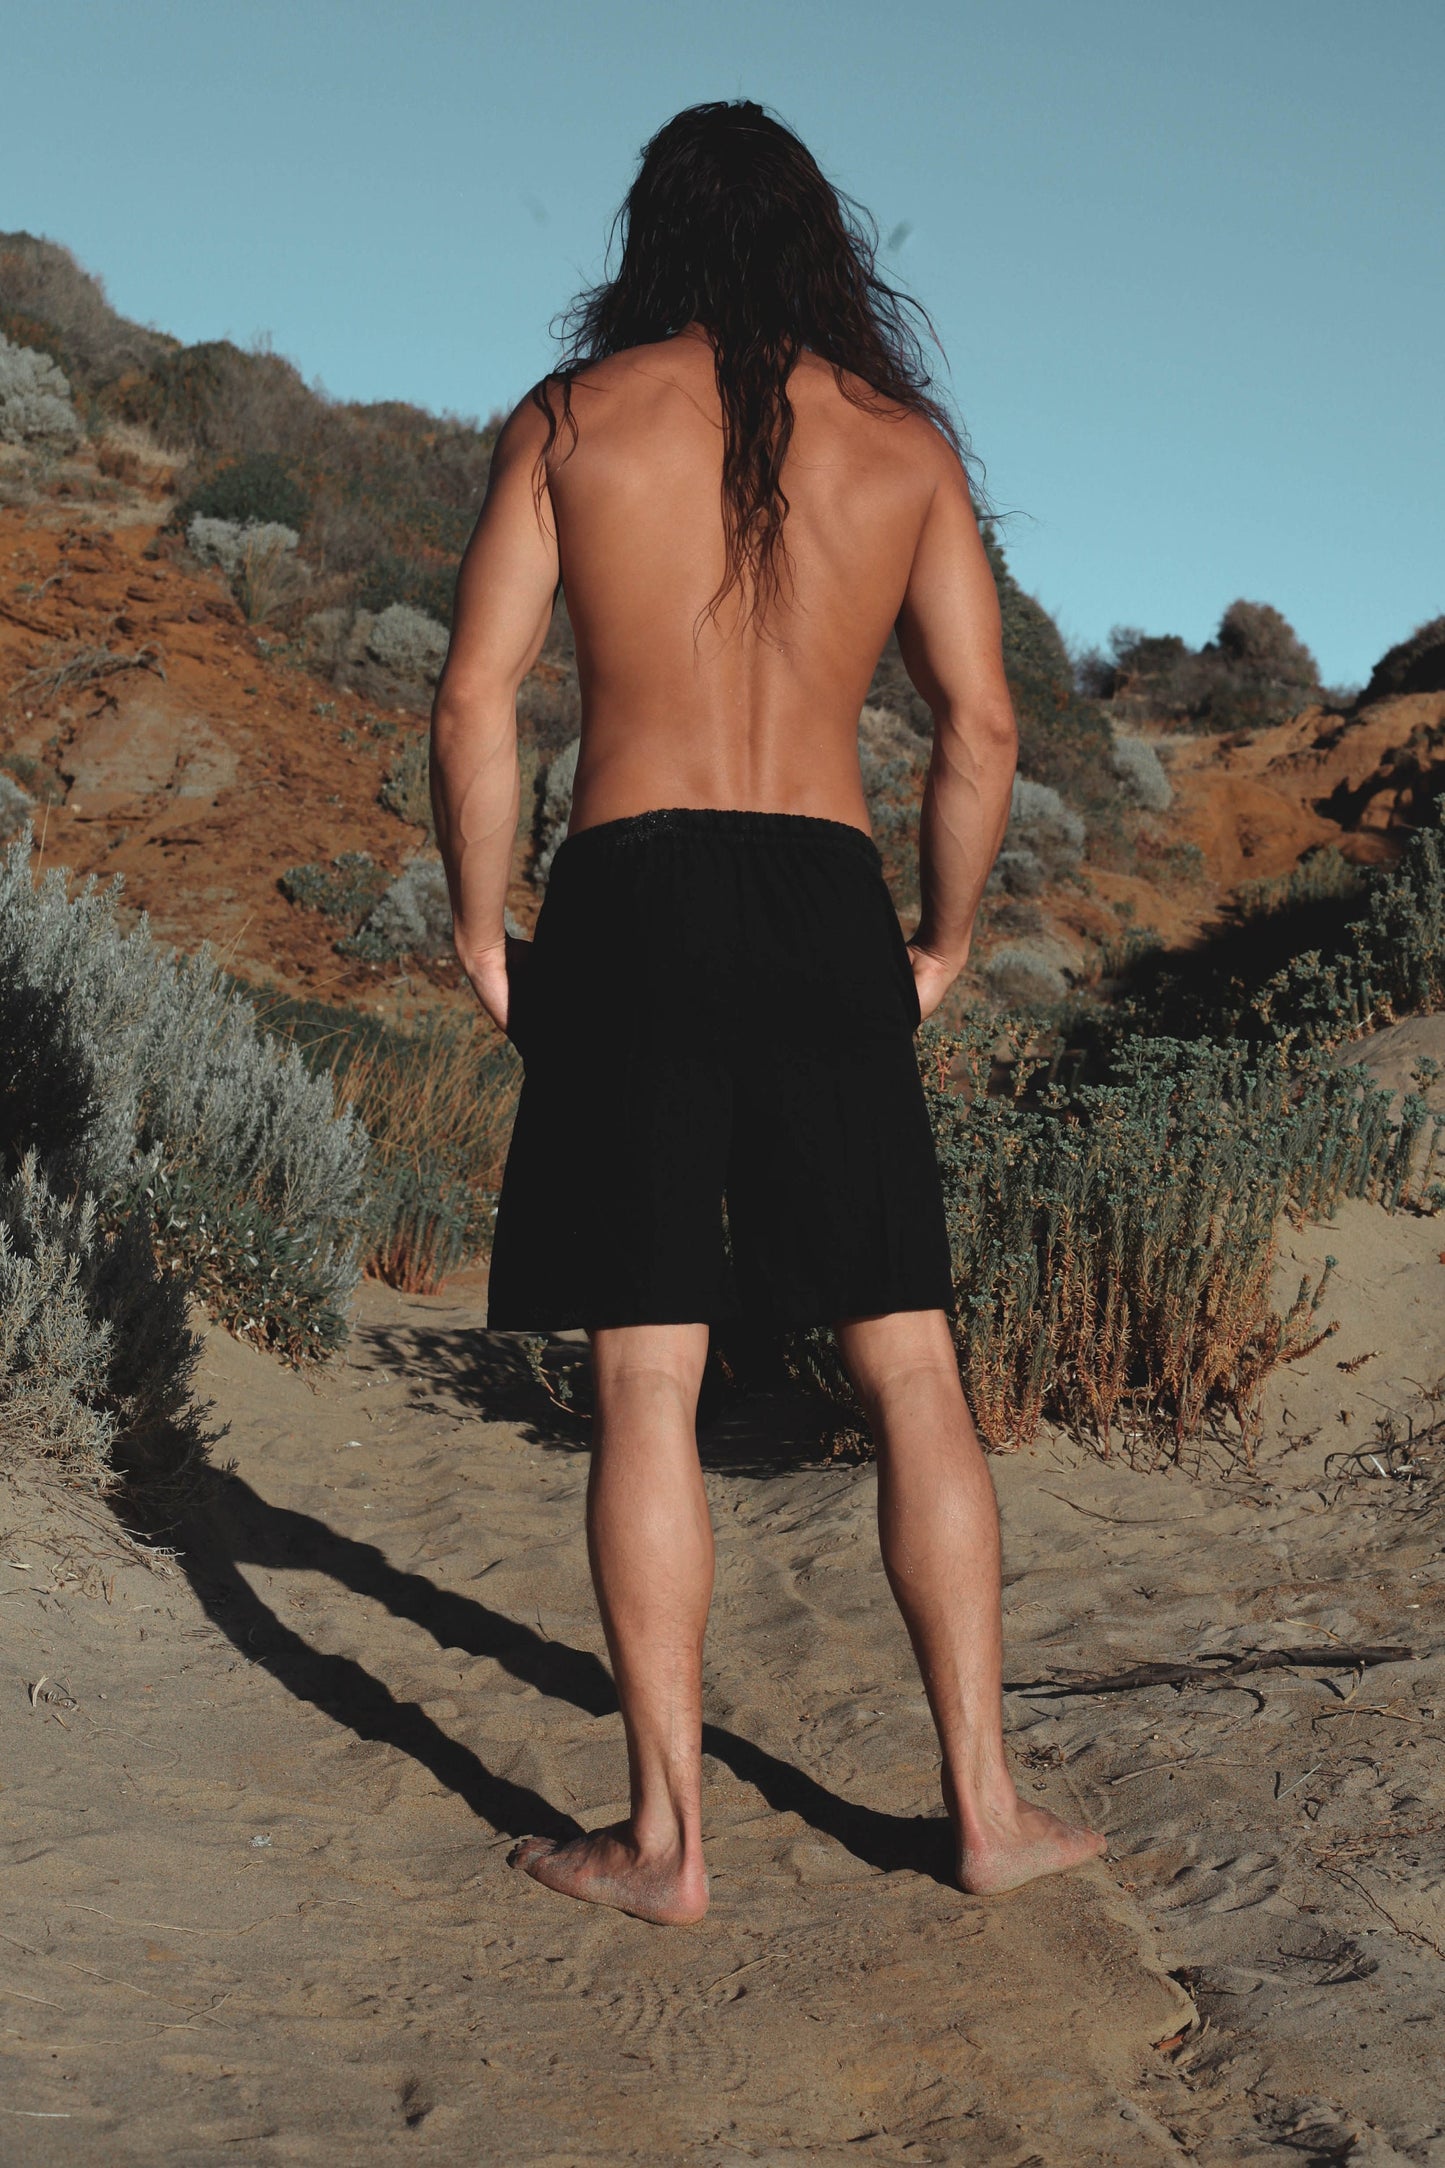 YUGINI Black Short Pants Loose Comfortable Mens Shorts with Pockets Natural Cotton Plant Dyed Yoga Workout Ninja Gypsy Festival Gym AJJAYA